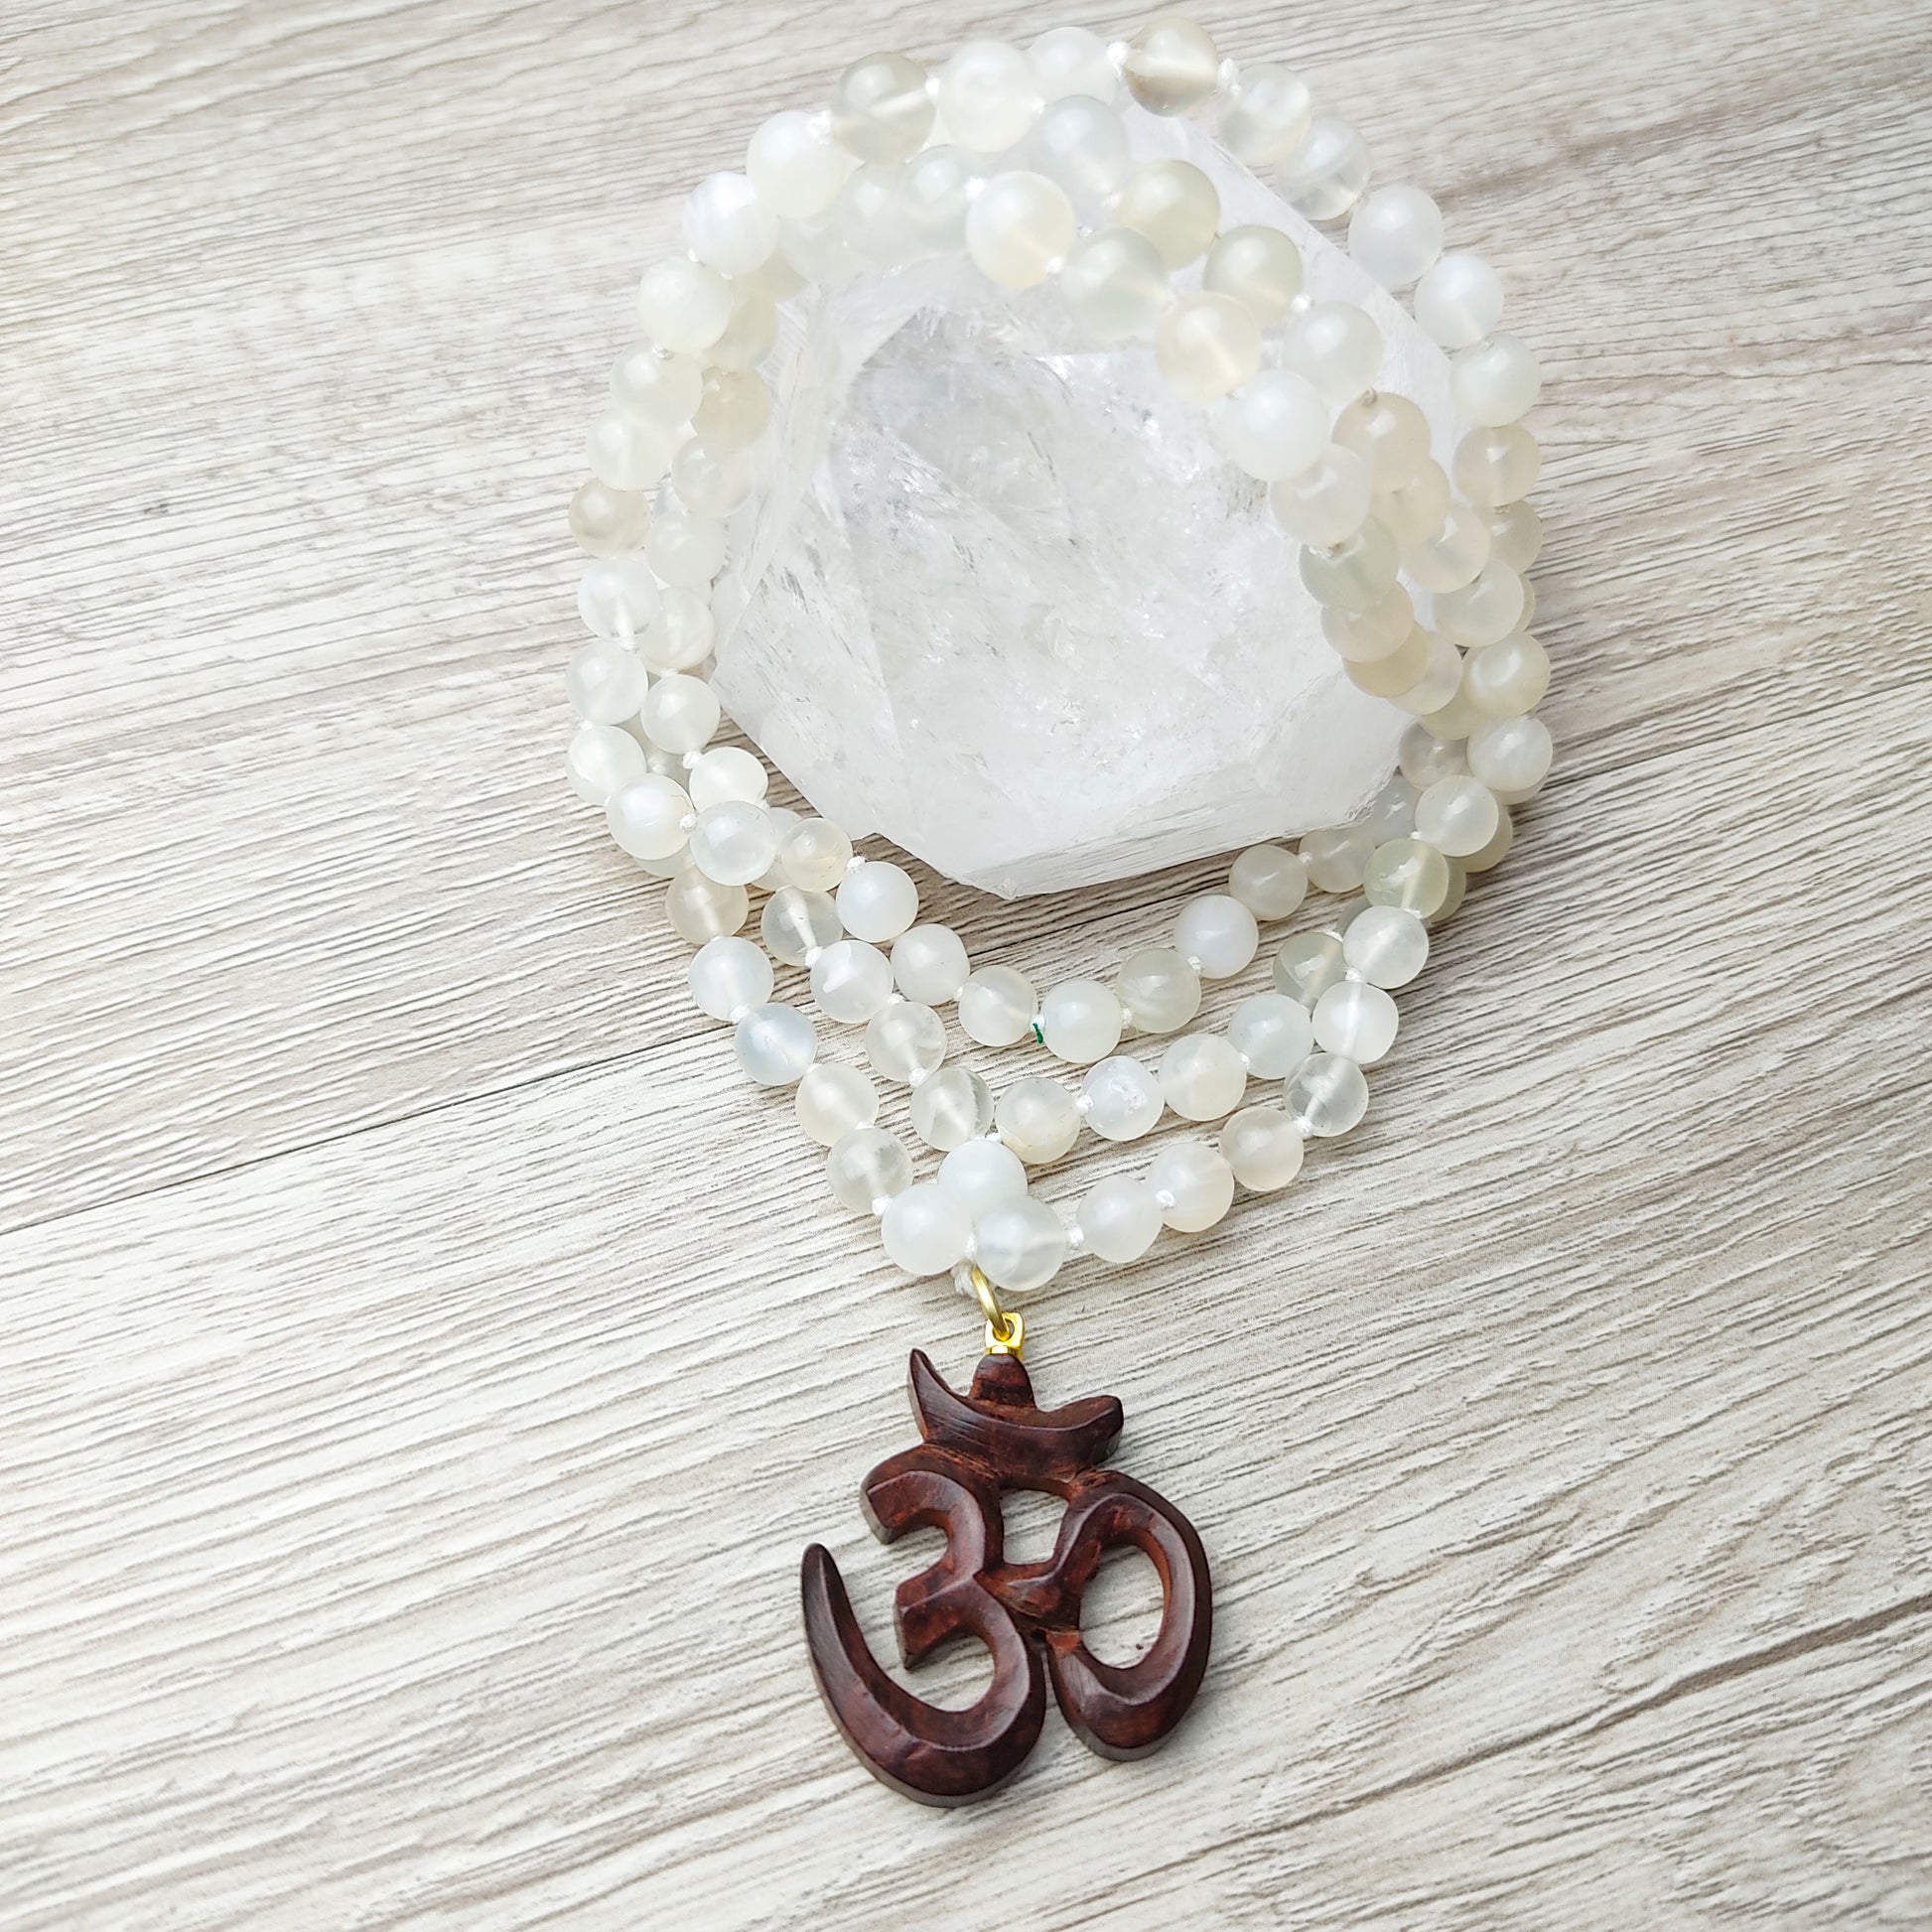 moonstone beads necklace  rosewood om symbol pendant